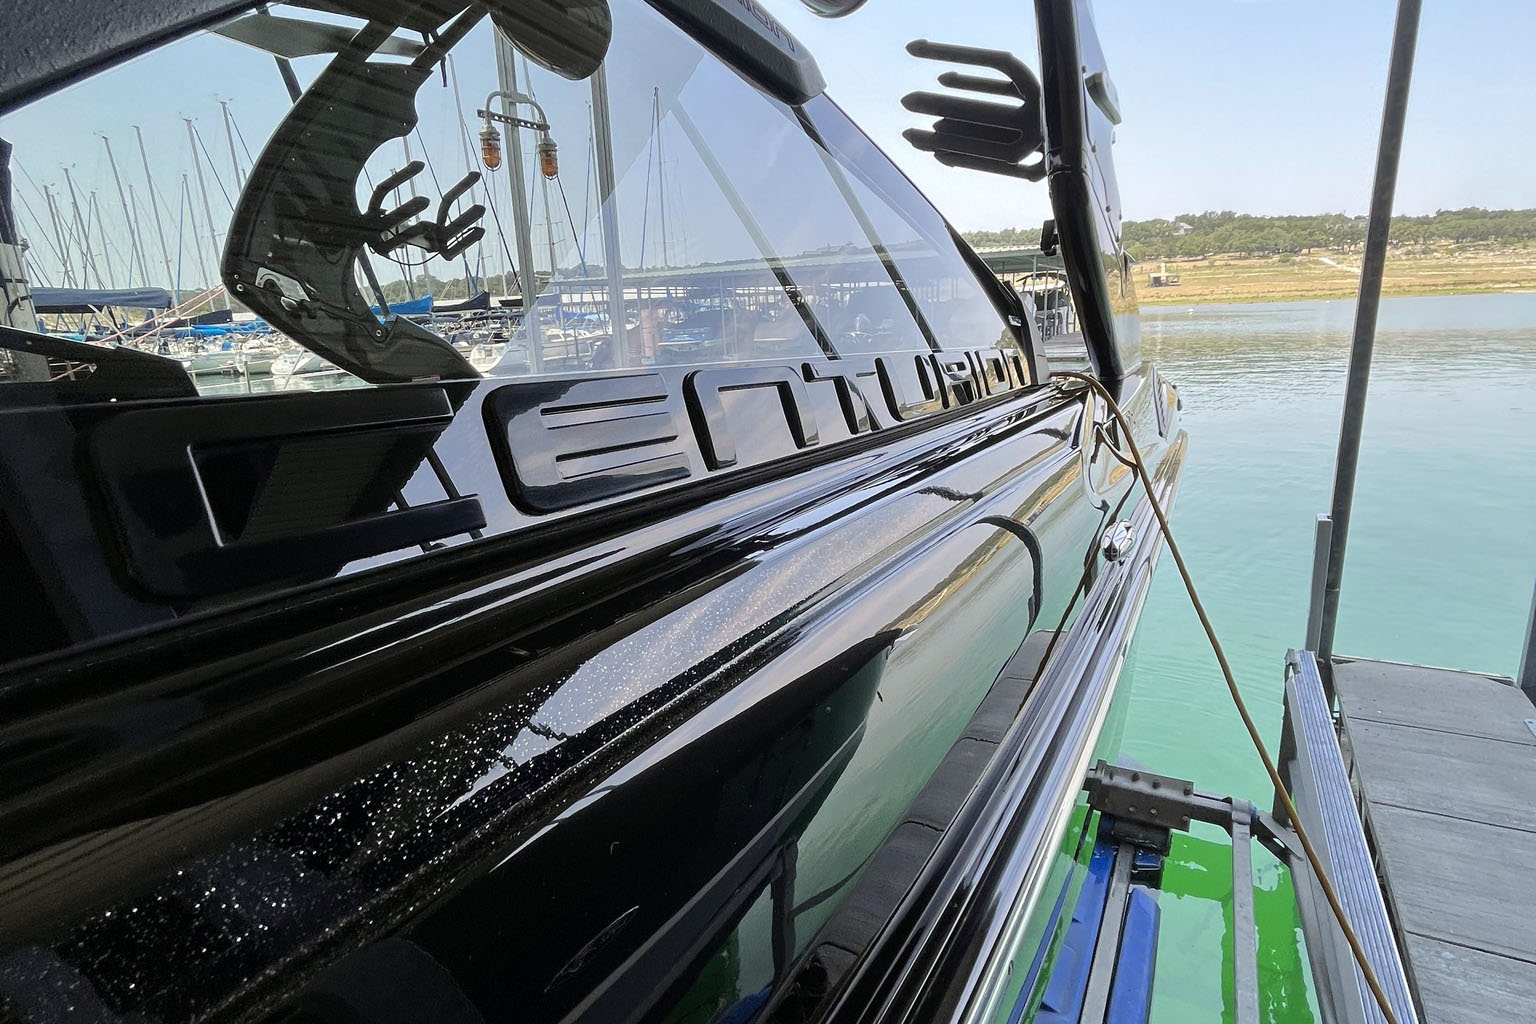 Pristine Clean ATX - Lake Travis Boat Detailing and More